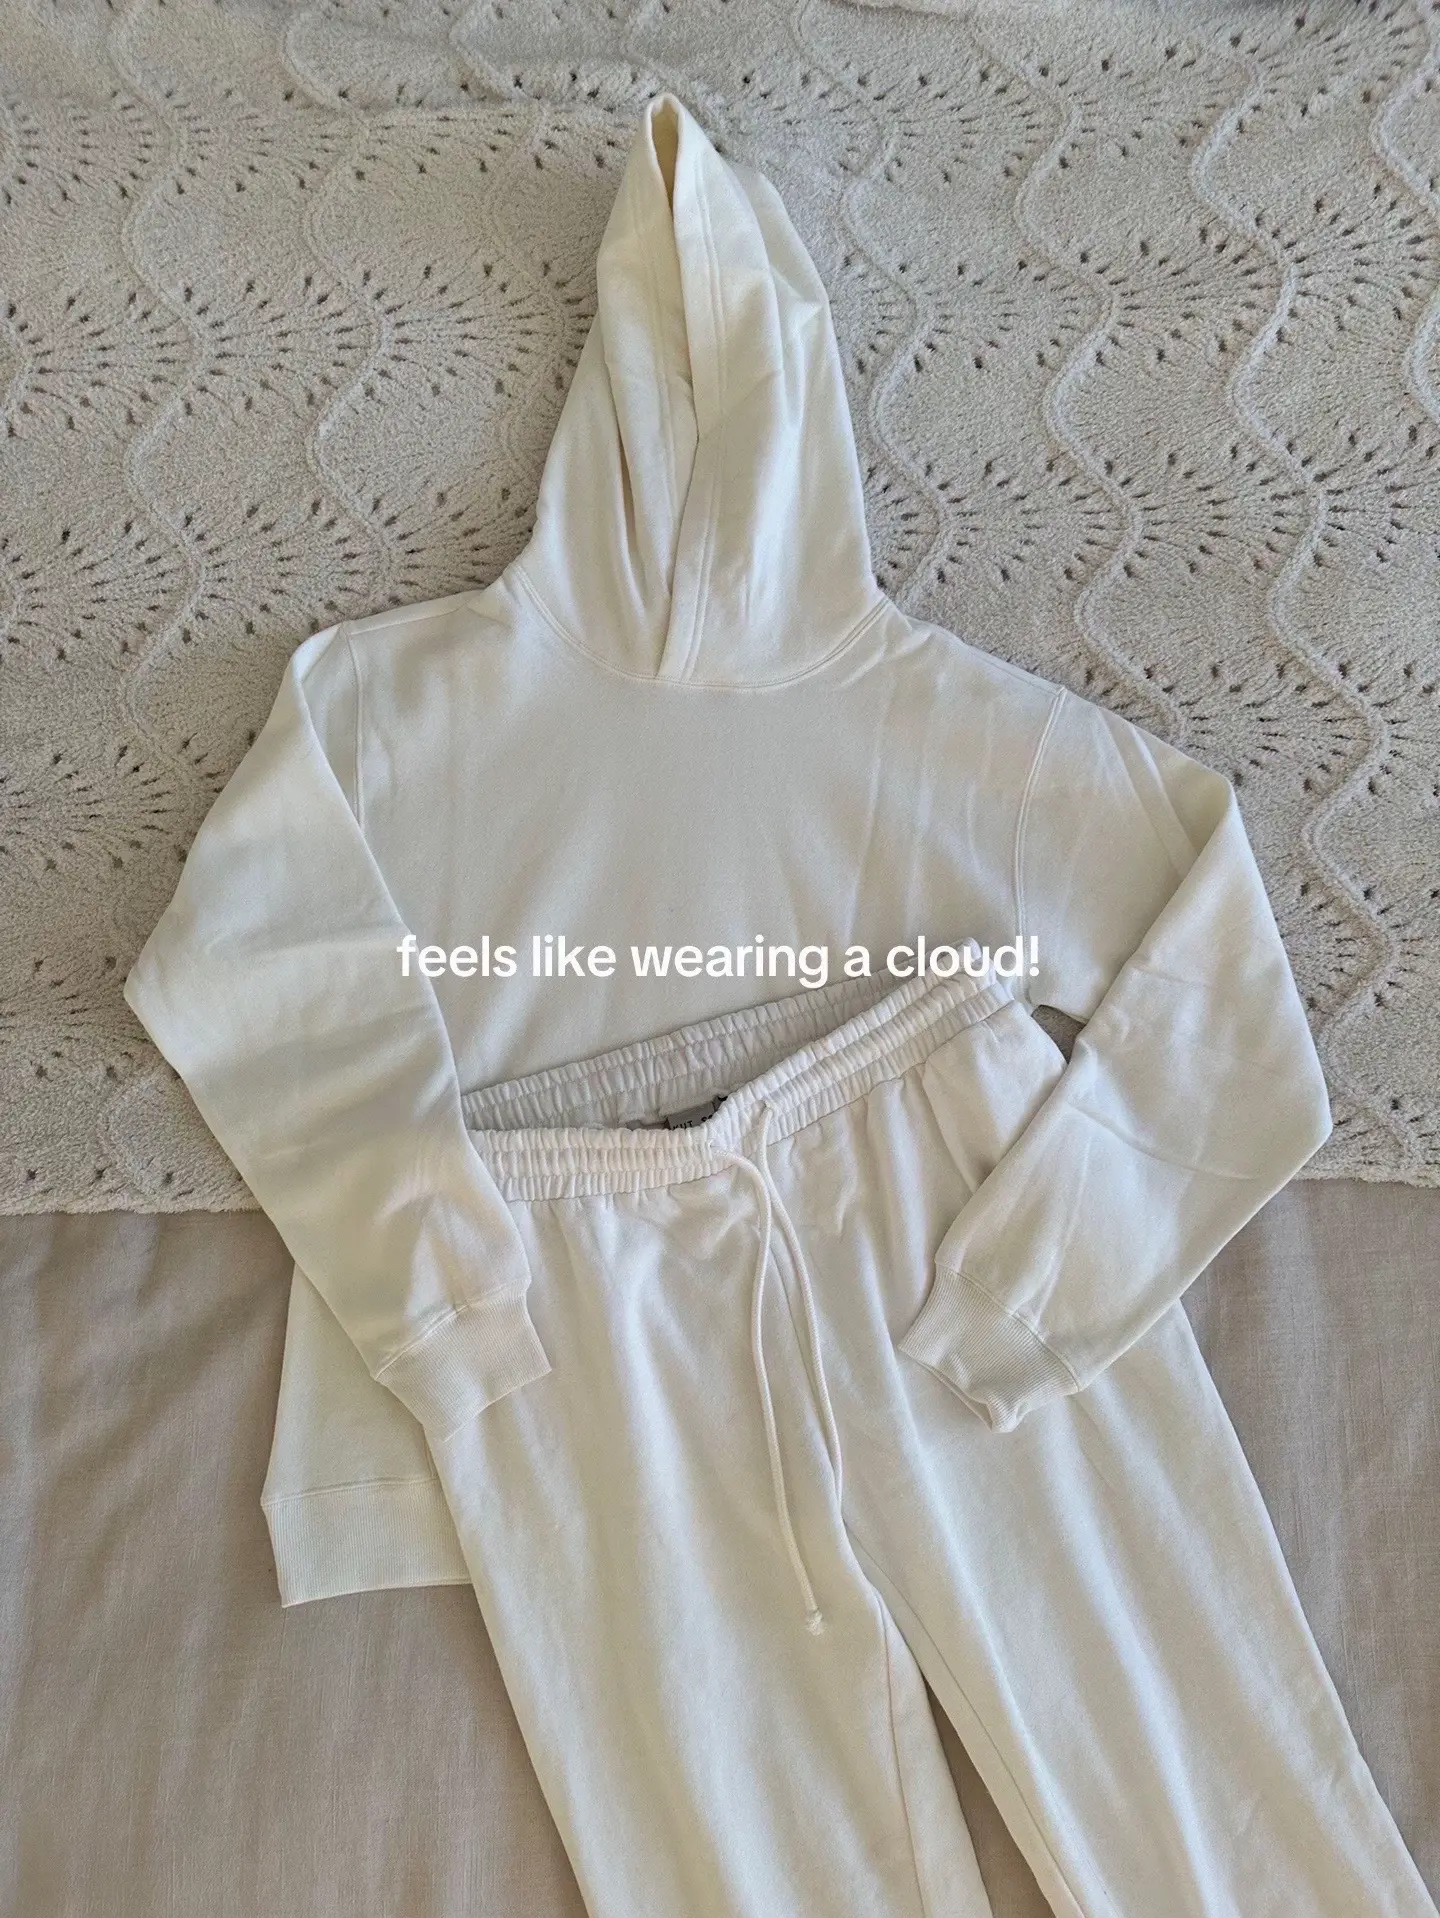 Women's Lounge Hooded Sleep Sweatshirt - Colsie Gray M, Size